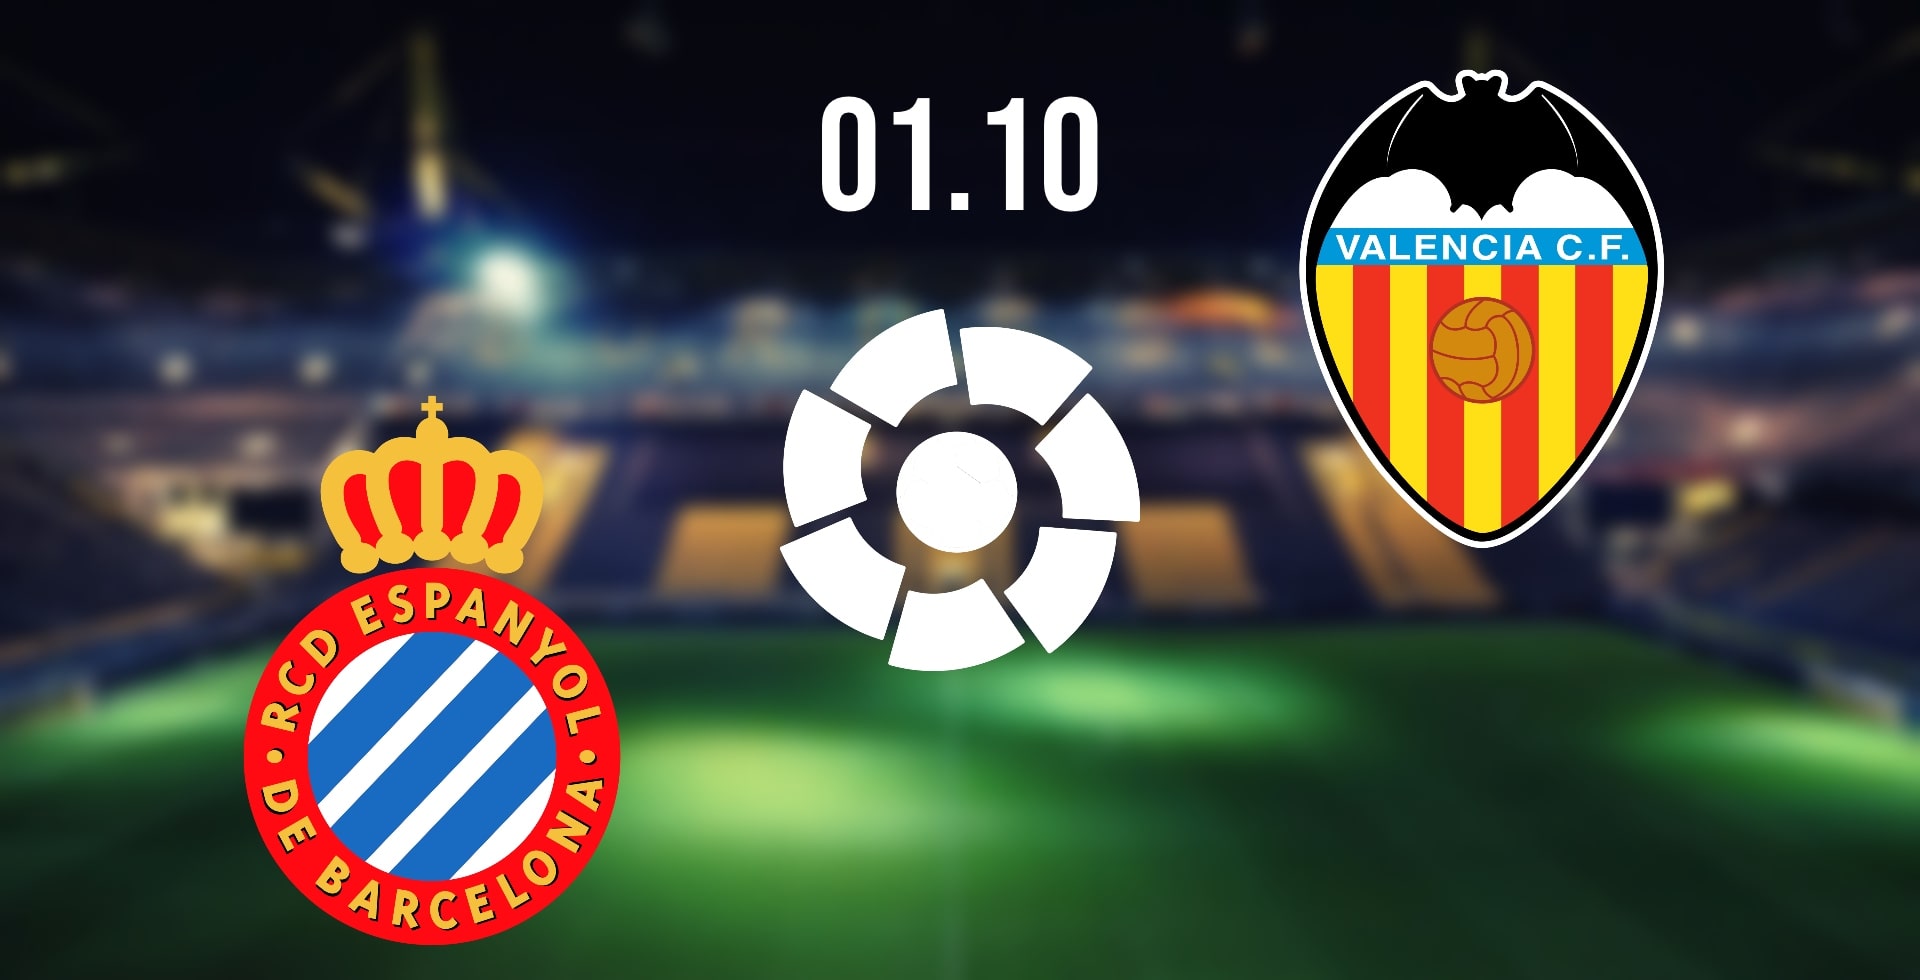 Espanyol vs Valencia Prediction: La Liga Match on 01.10.2022